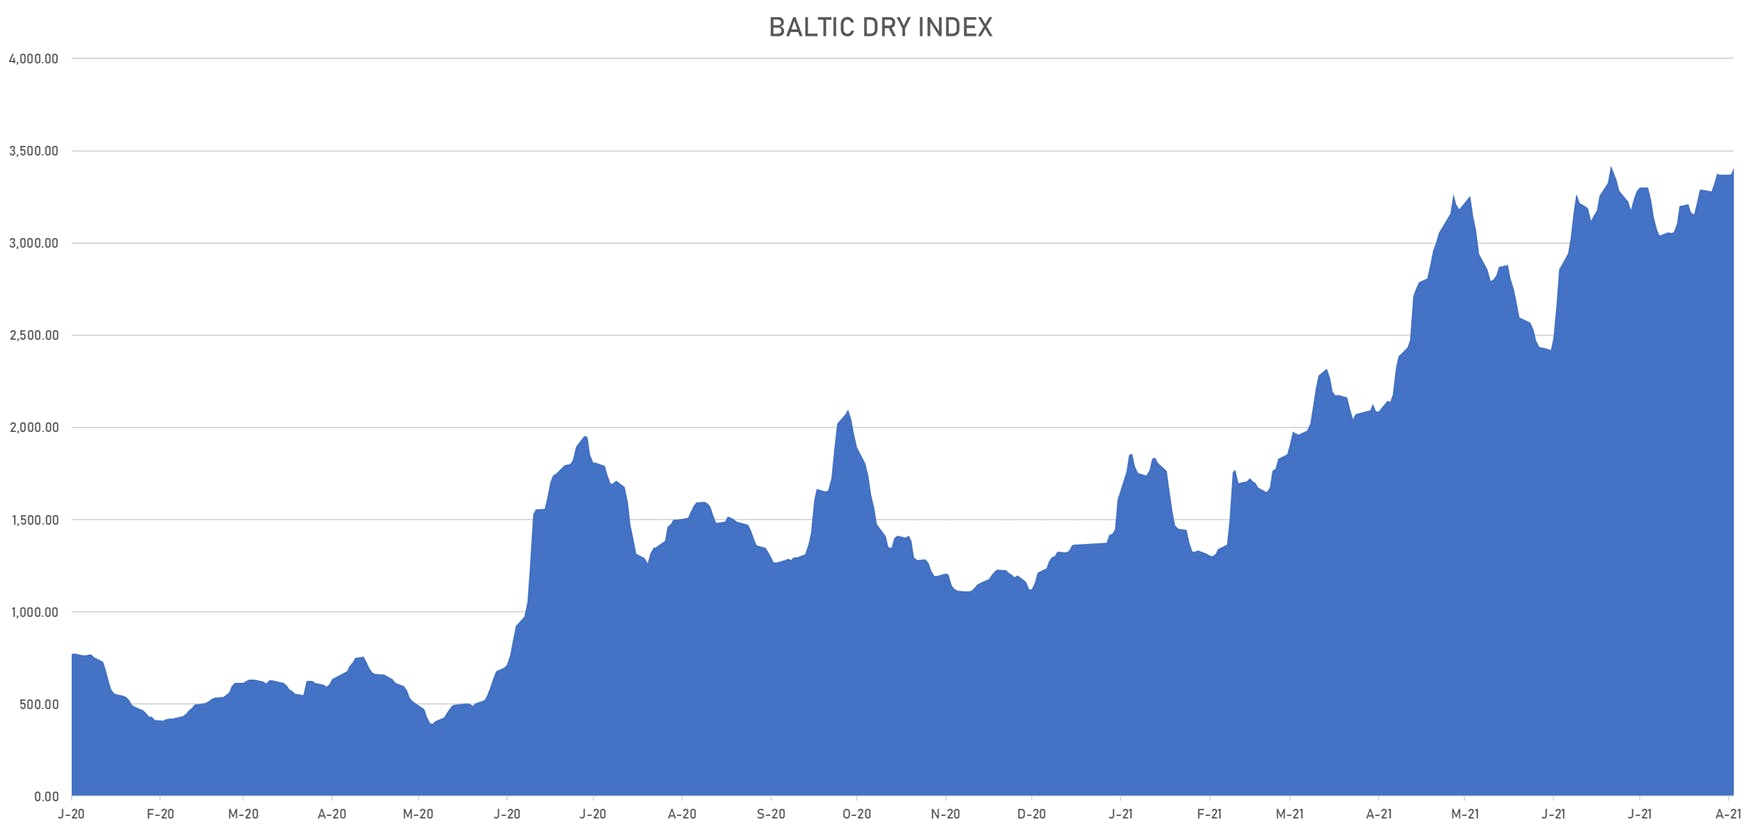 Baltic Dry Index | Sources: phipost.com, Refinitiv data